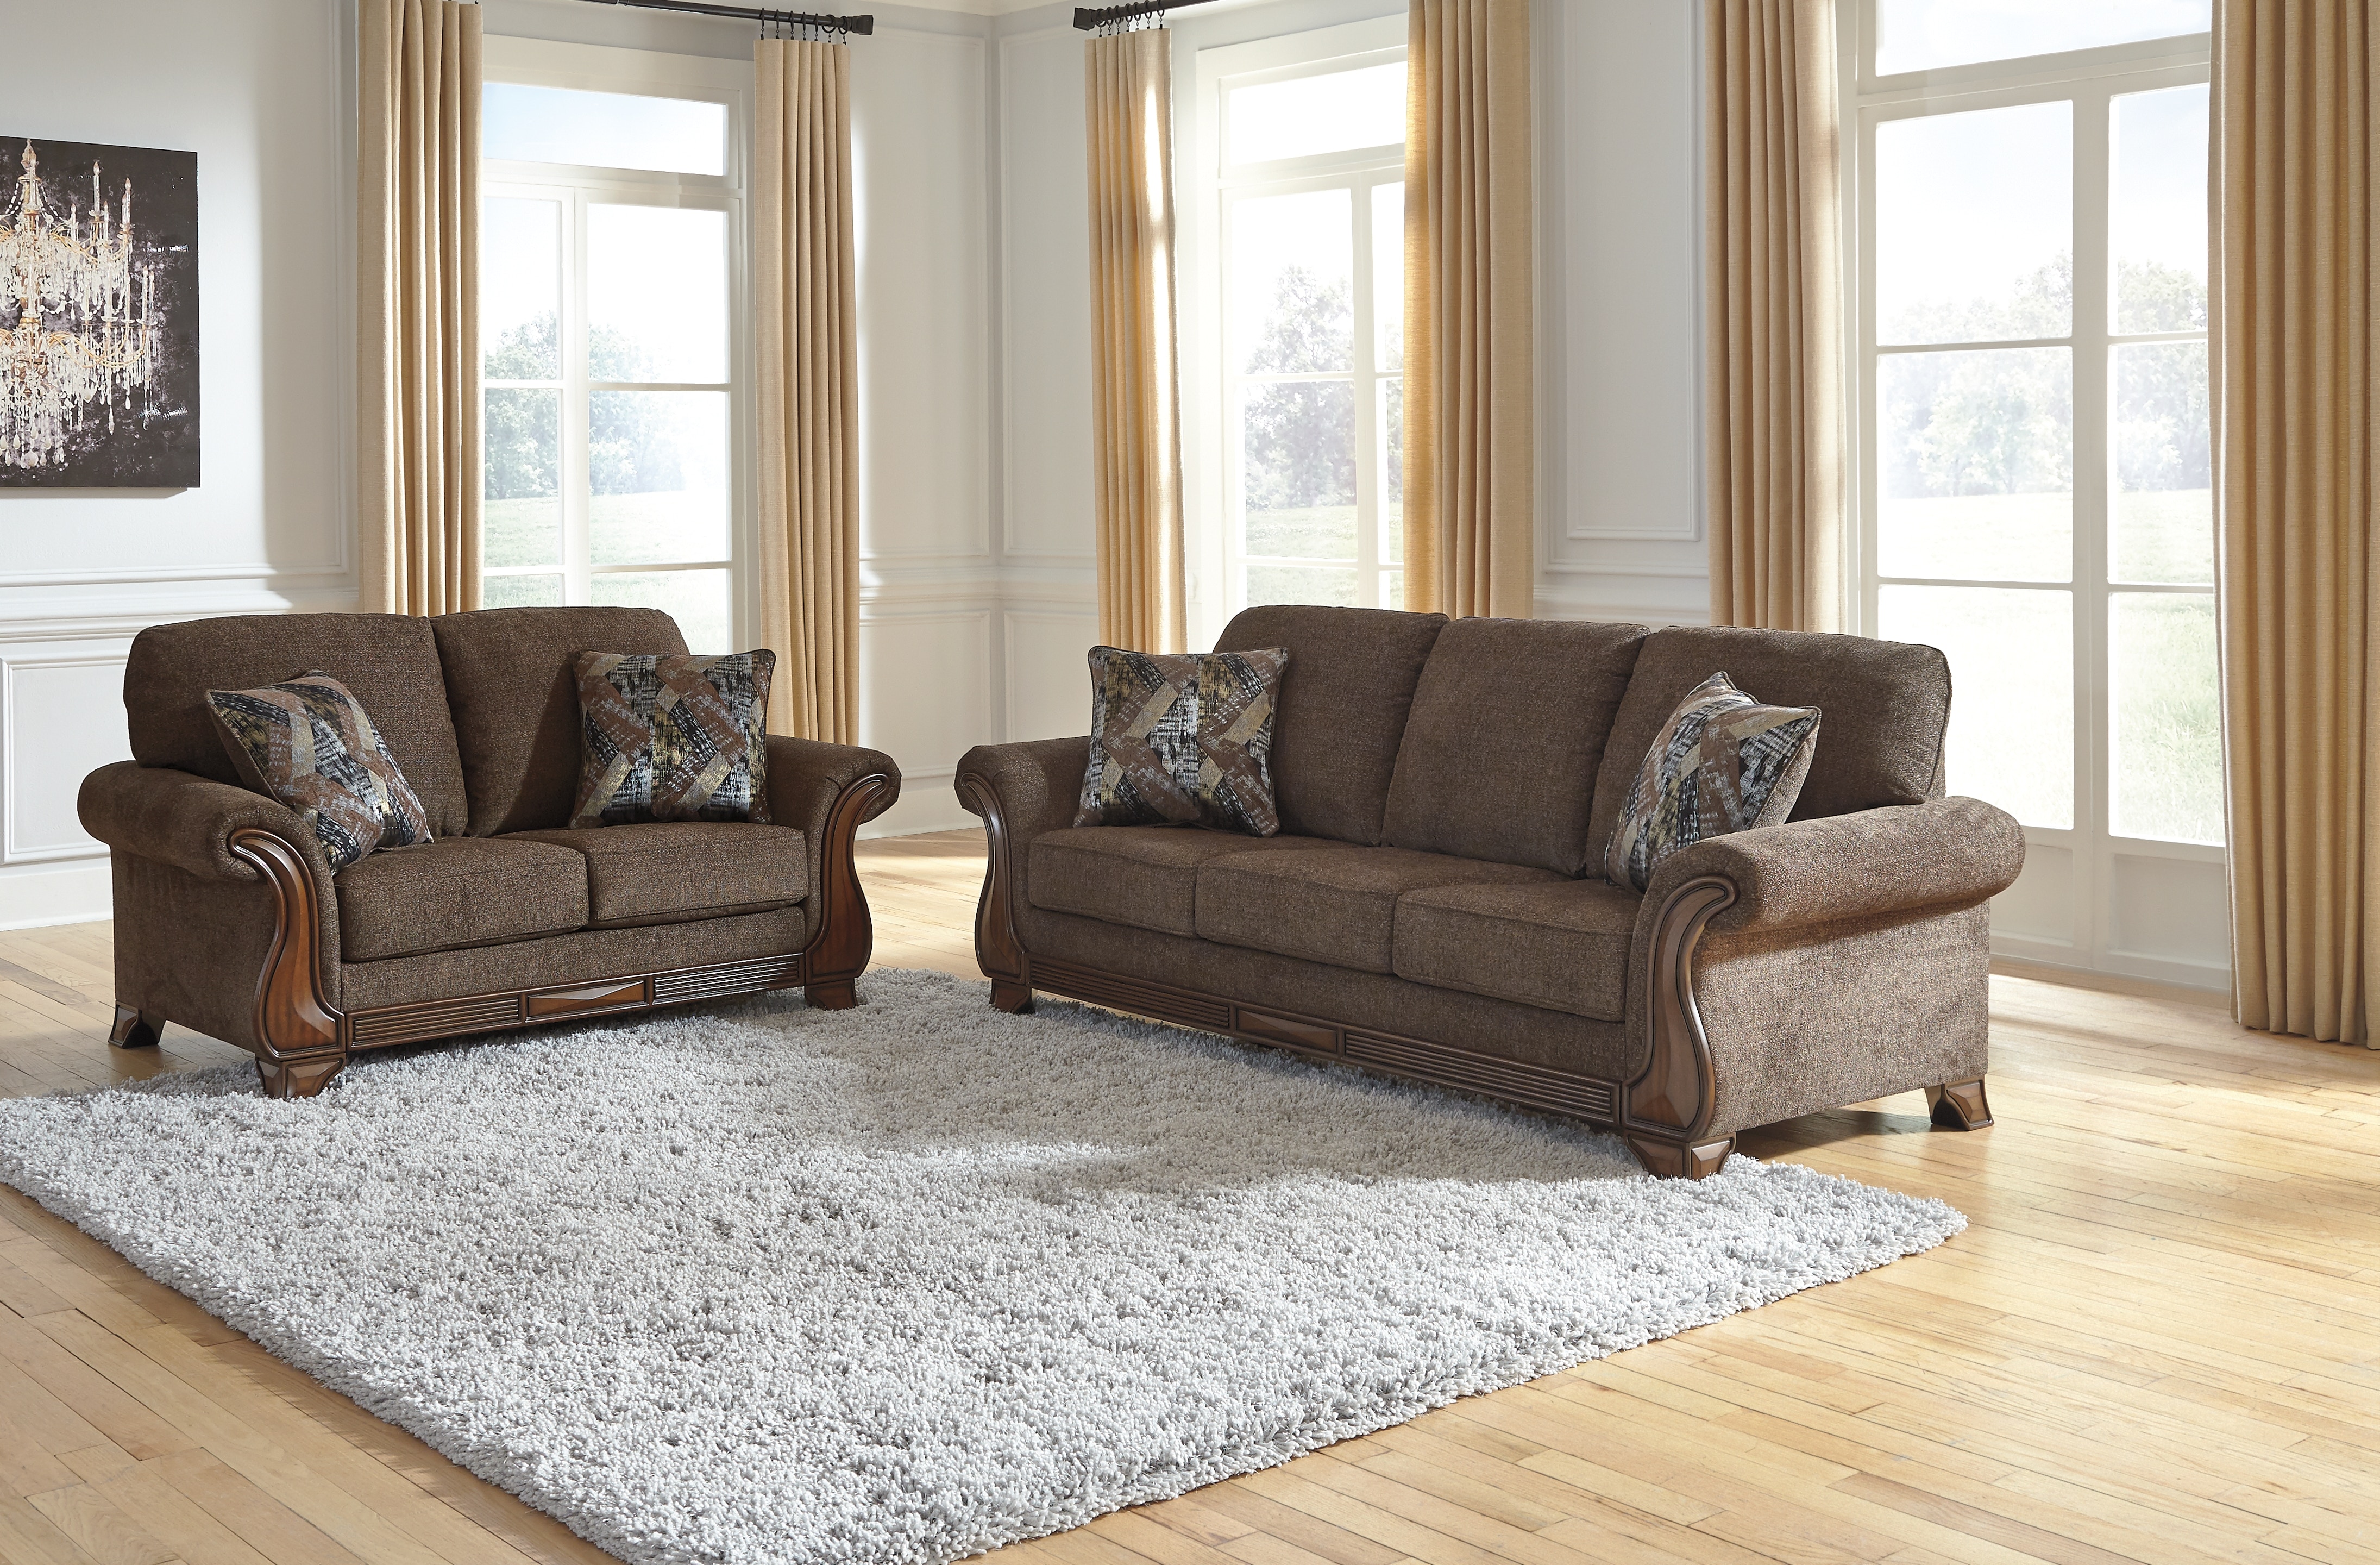 Benchcraft Living Room Miltonwood Sofa and Loveseat 85506U1 - The Cleveland  Furniture Company